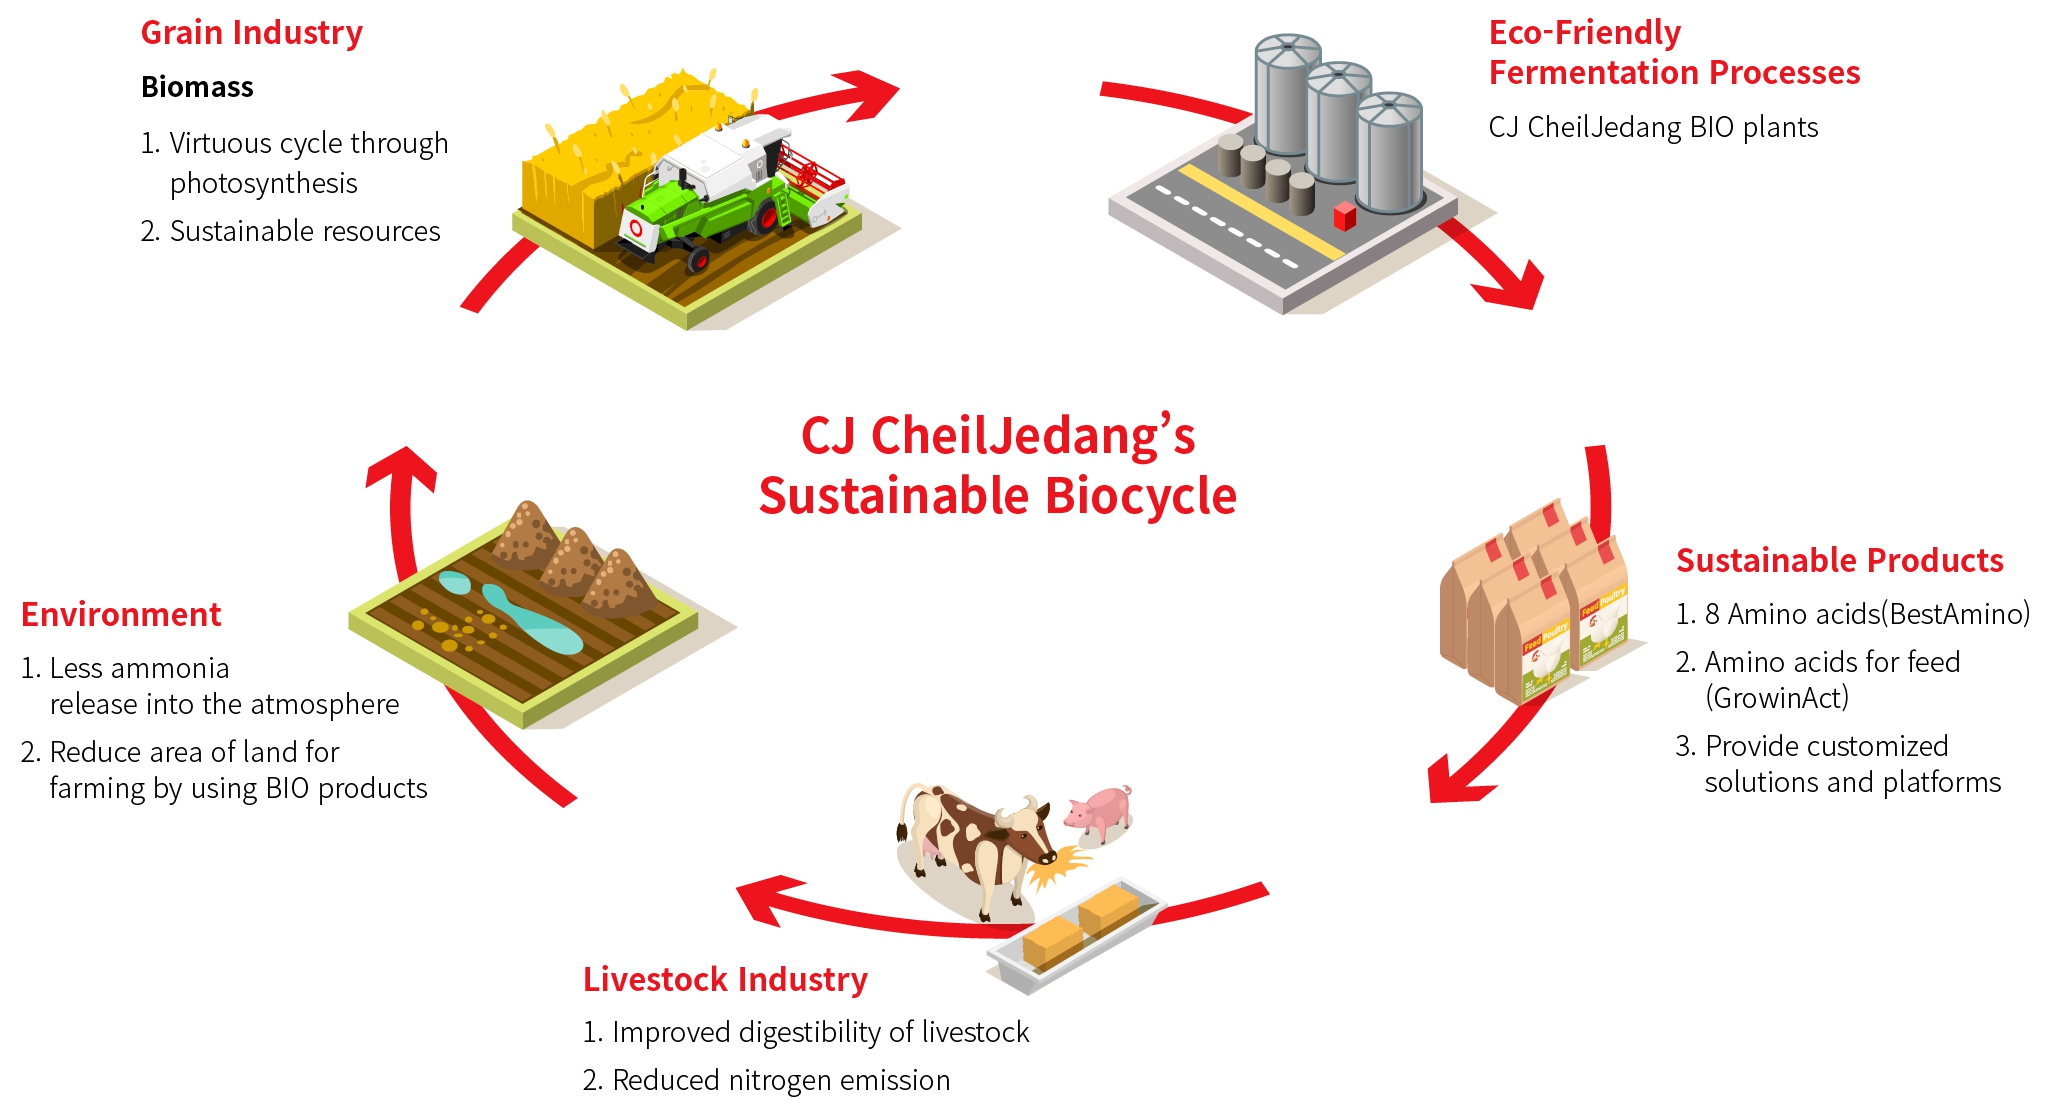 CJ CheilJedang's sustainable Biocycle